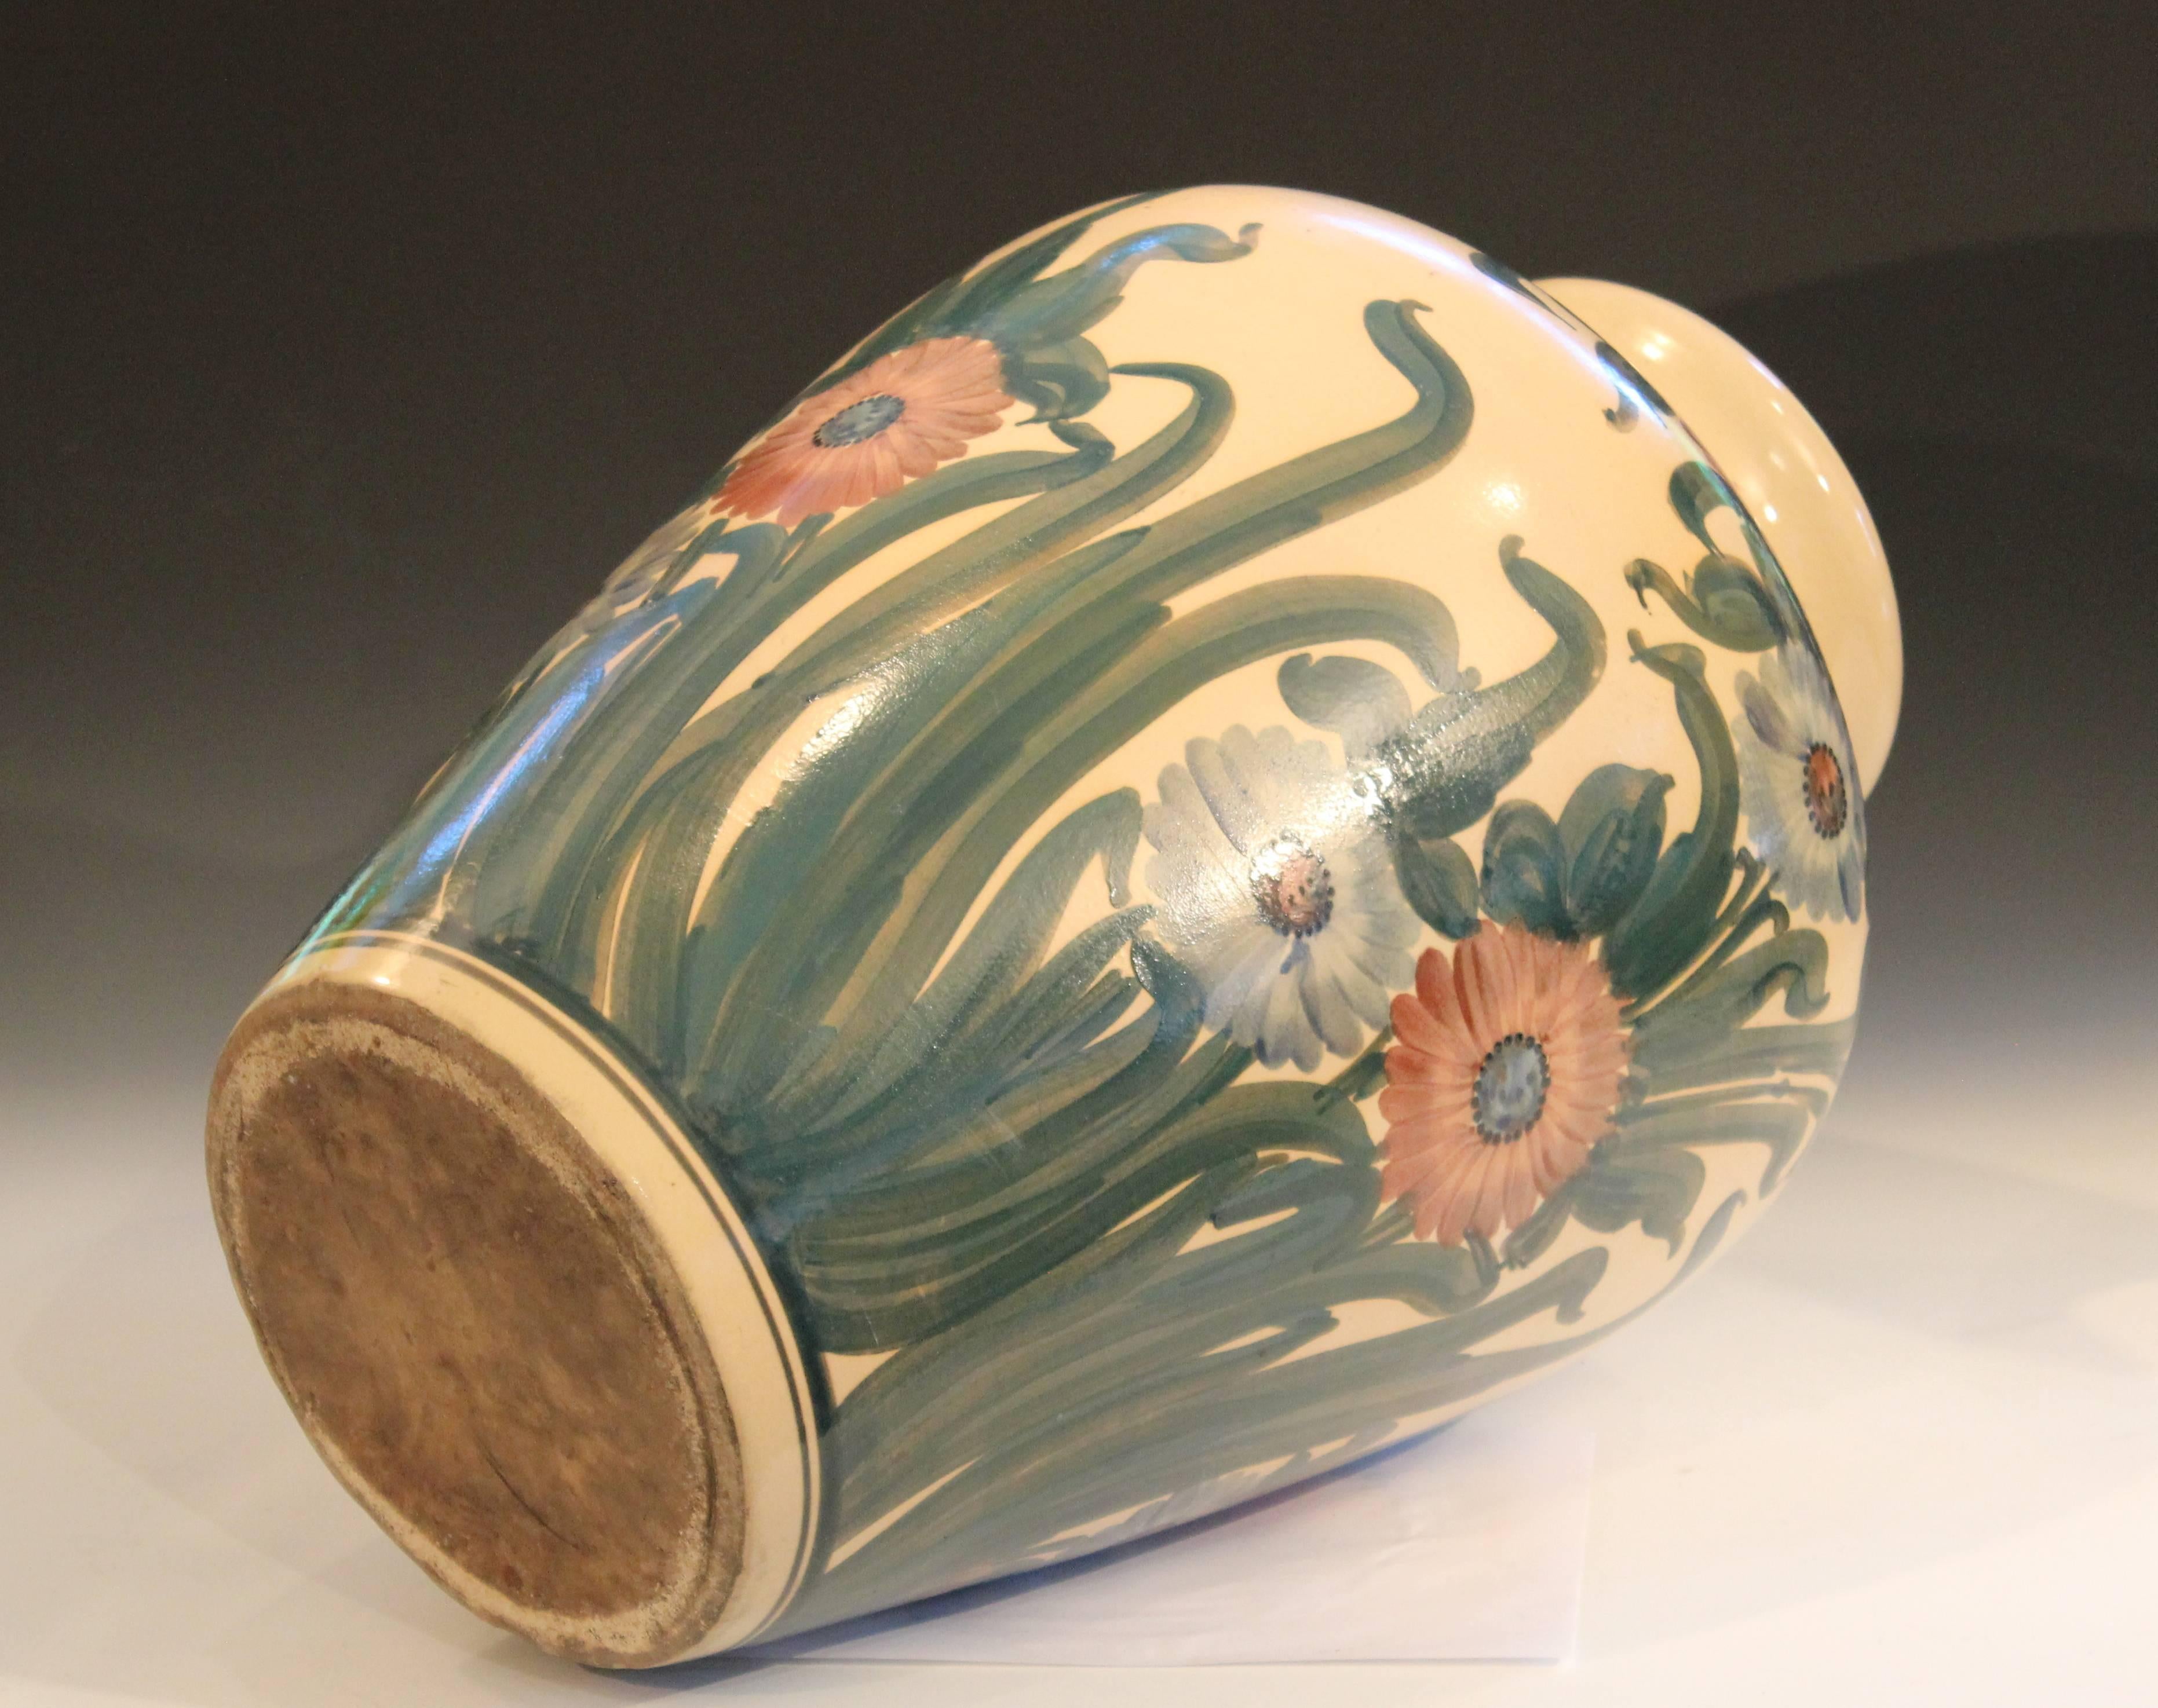 American Big RRP Co Robinson Ransbottom Roseville Garden Urn Pottery Porch Floor Vase For Sale